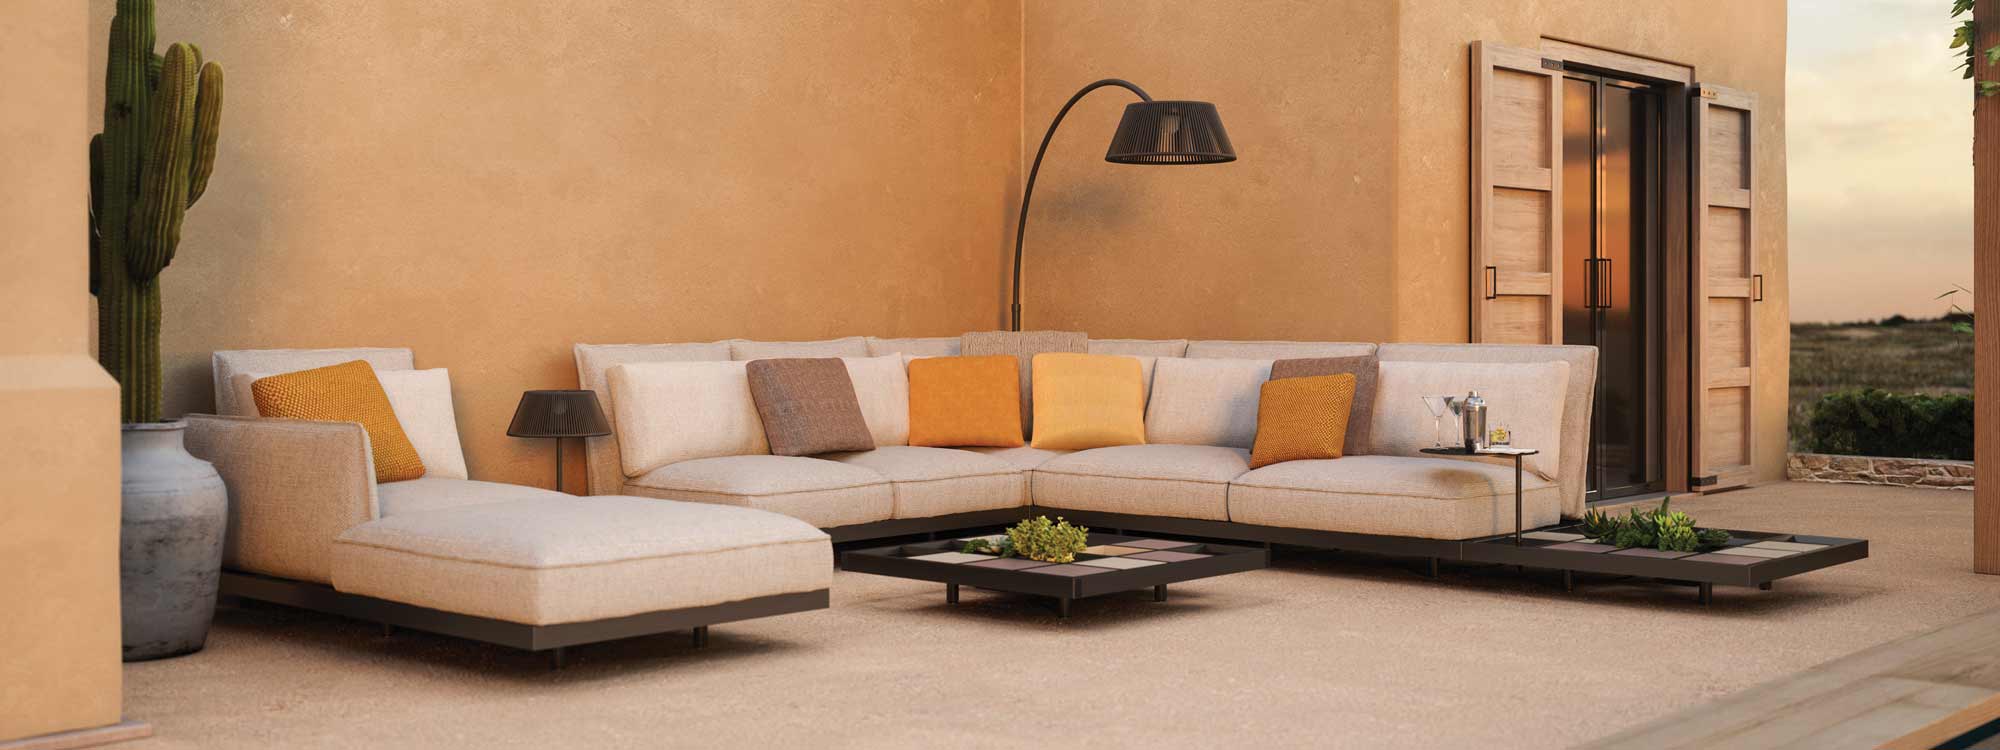 Royal Botania outdoor furniture collection includes luxury garden sofas such as Mozaix Aluminium modular lounge furniture